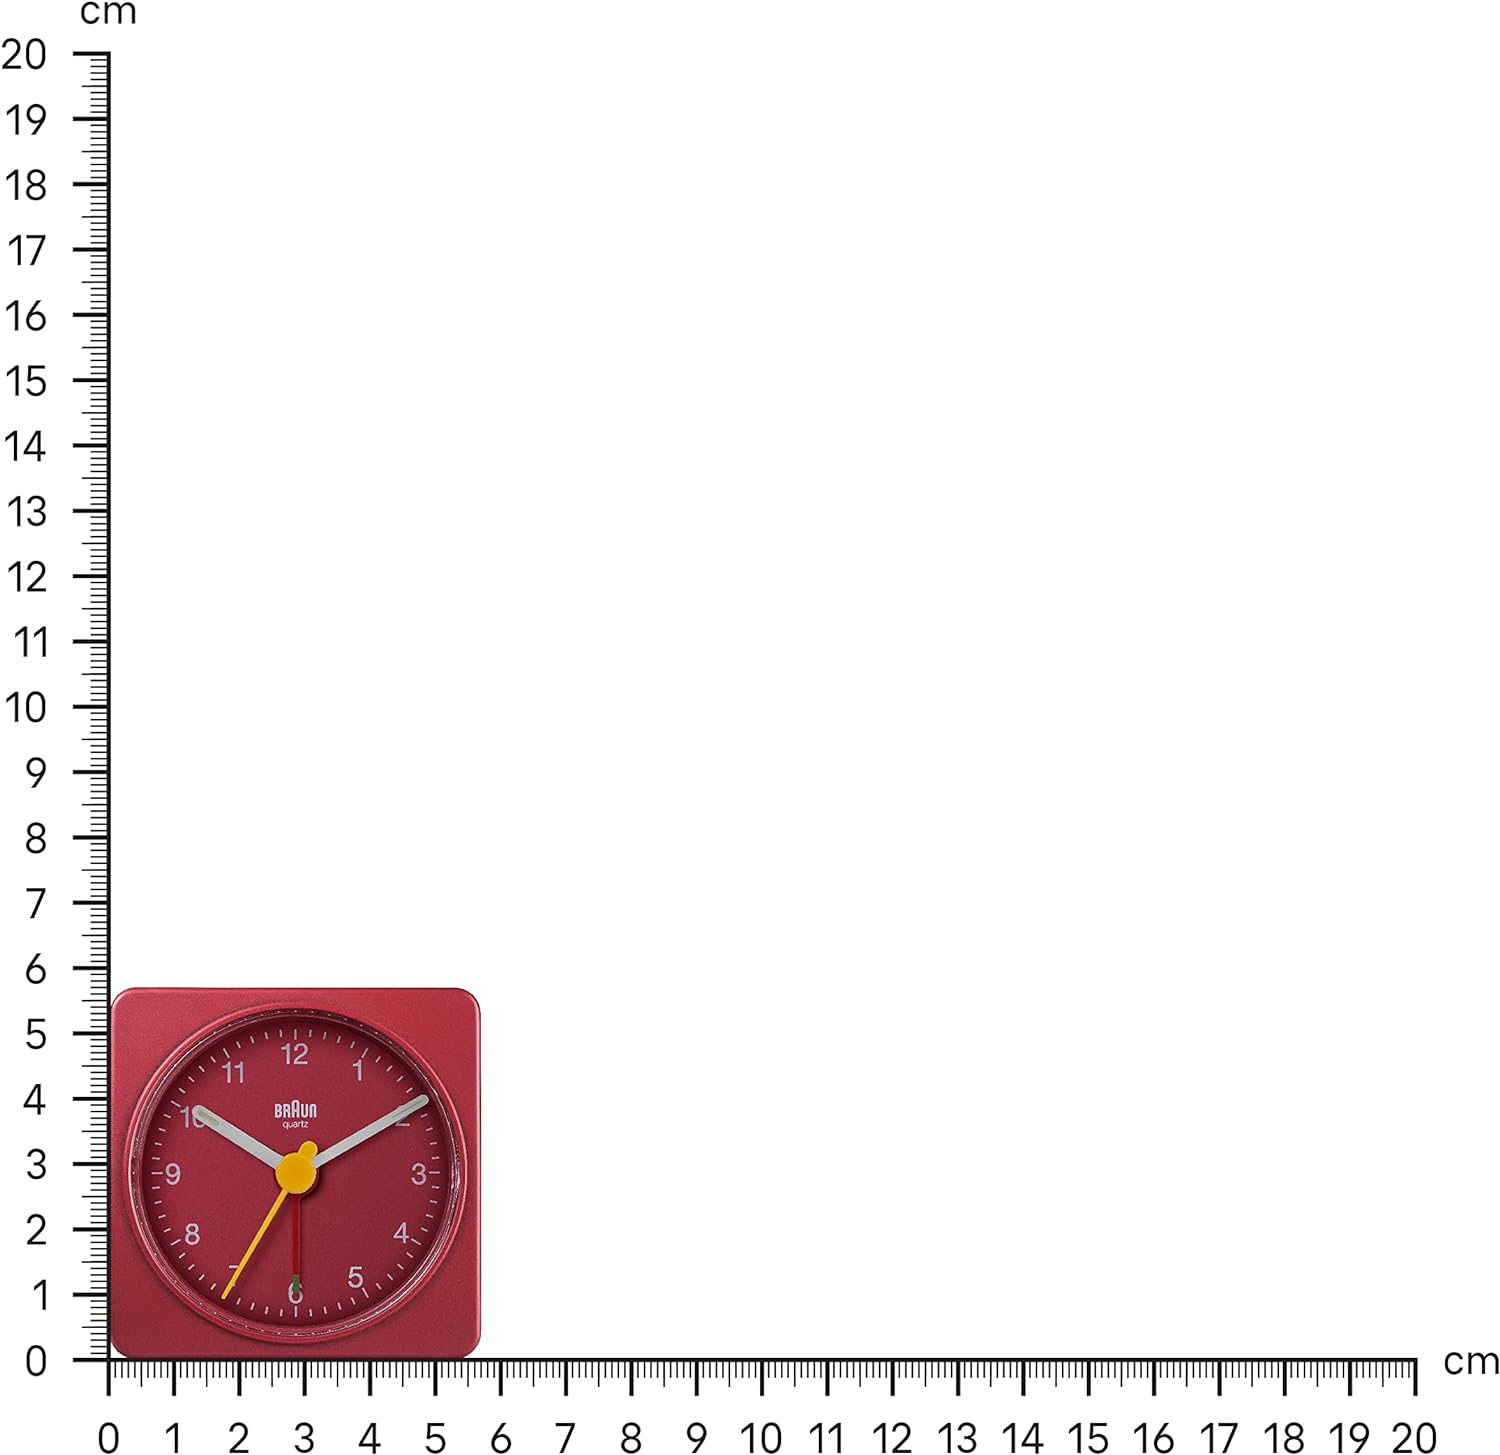 Braun Classic Travel Analogue Alarm Clock With Crescendo Beep – Red